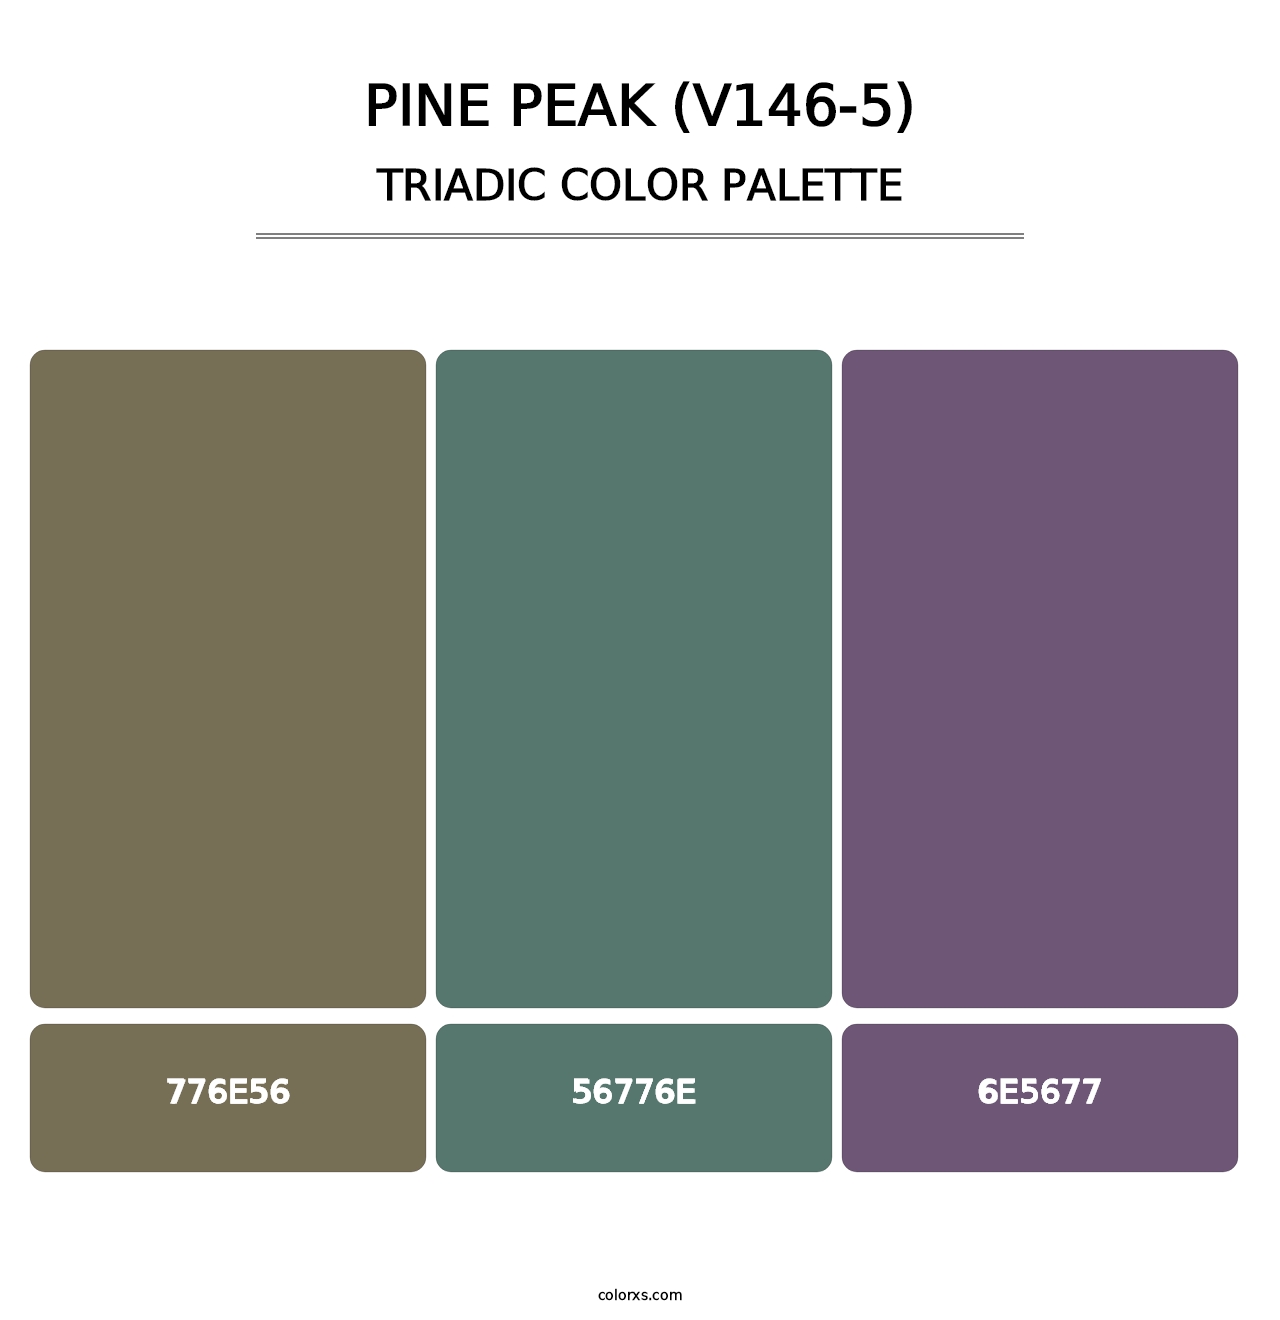 Pine Peak (V146-5) - Triadic Color Palette